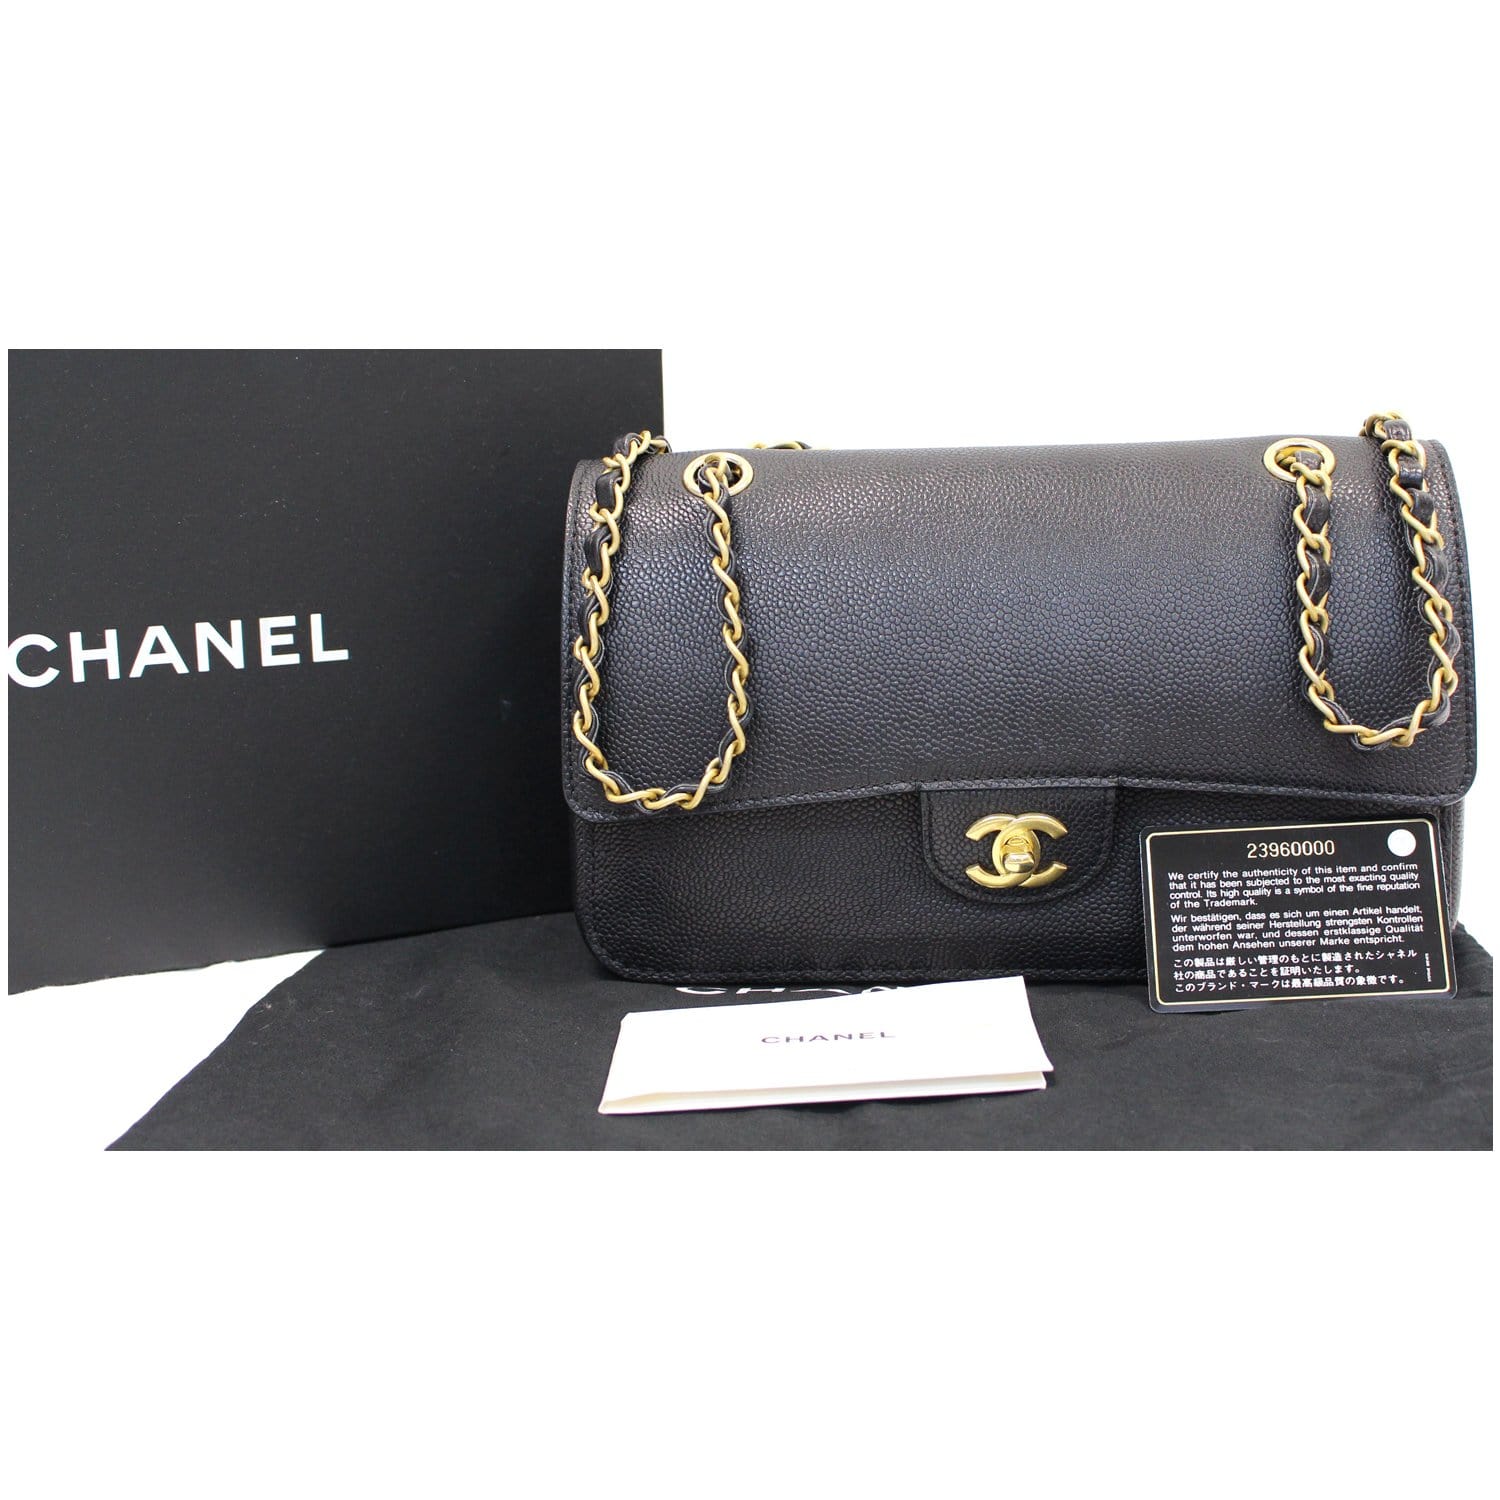 Chanel Jumbo bag black jersey Sylver Hardware